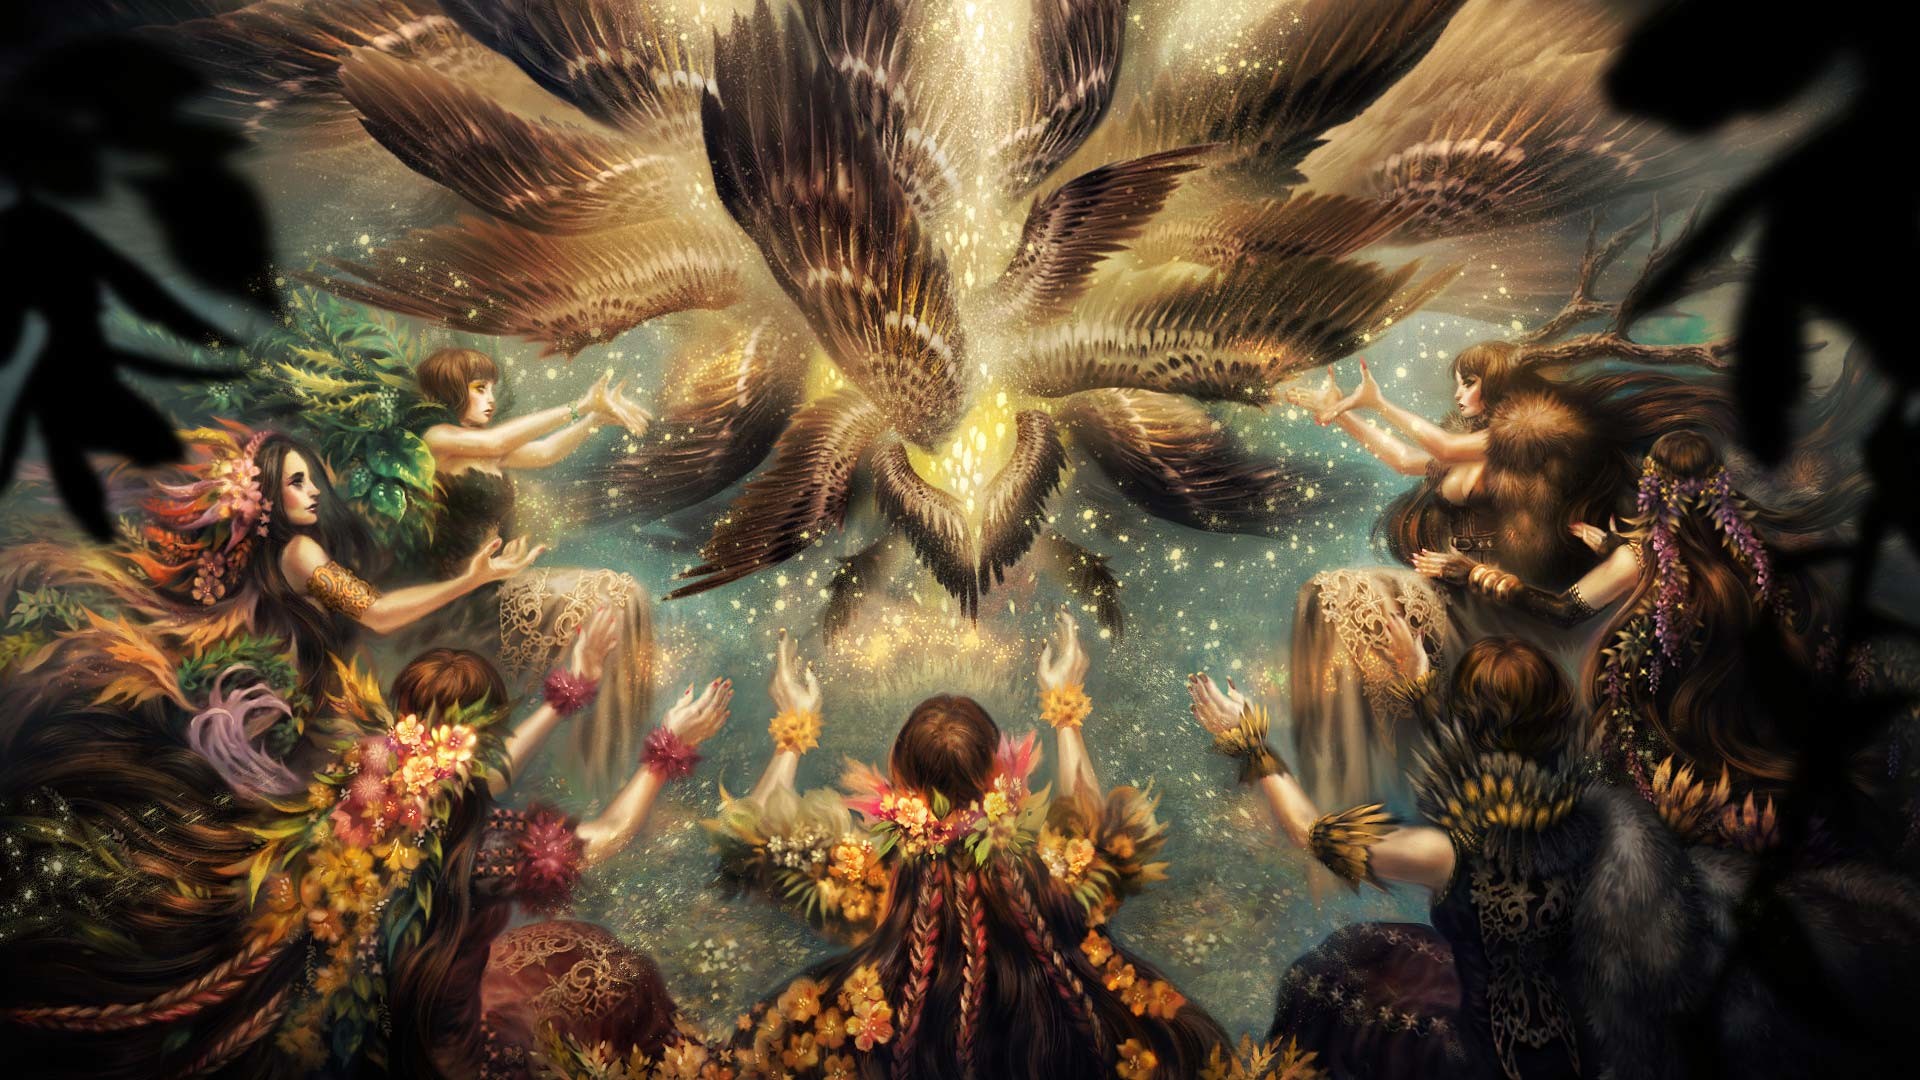 General 1920x1080 watermother Jian digital art fantasy art surreal angel wings flowers